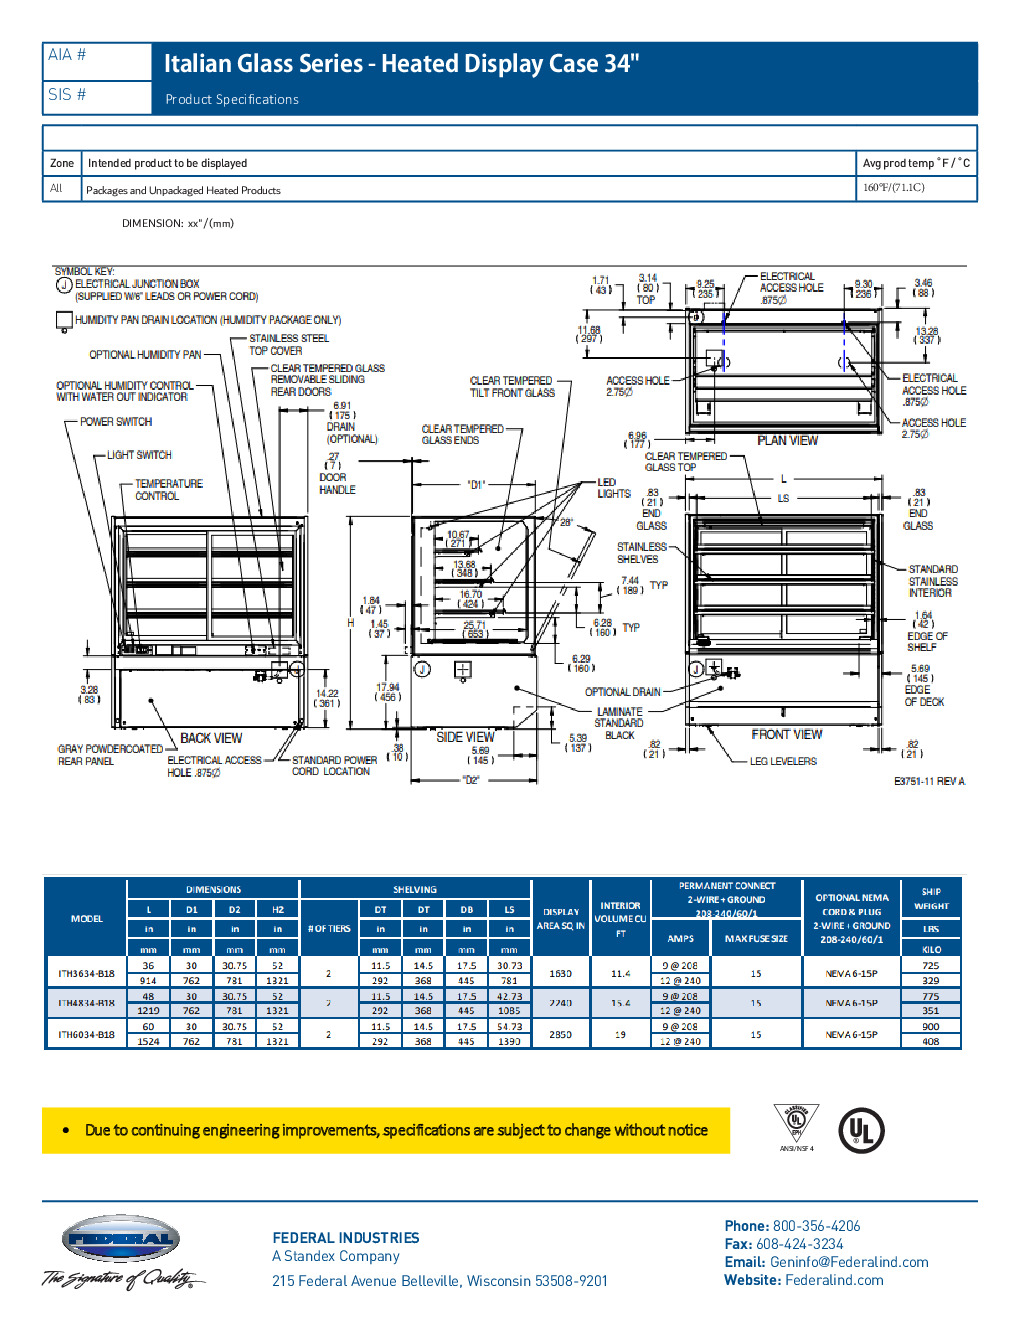 Federal Industries ITH6034-B18 Floor Model Heated Display Case